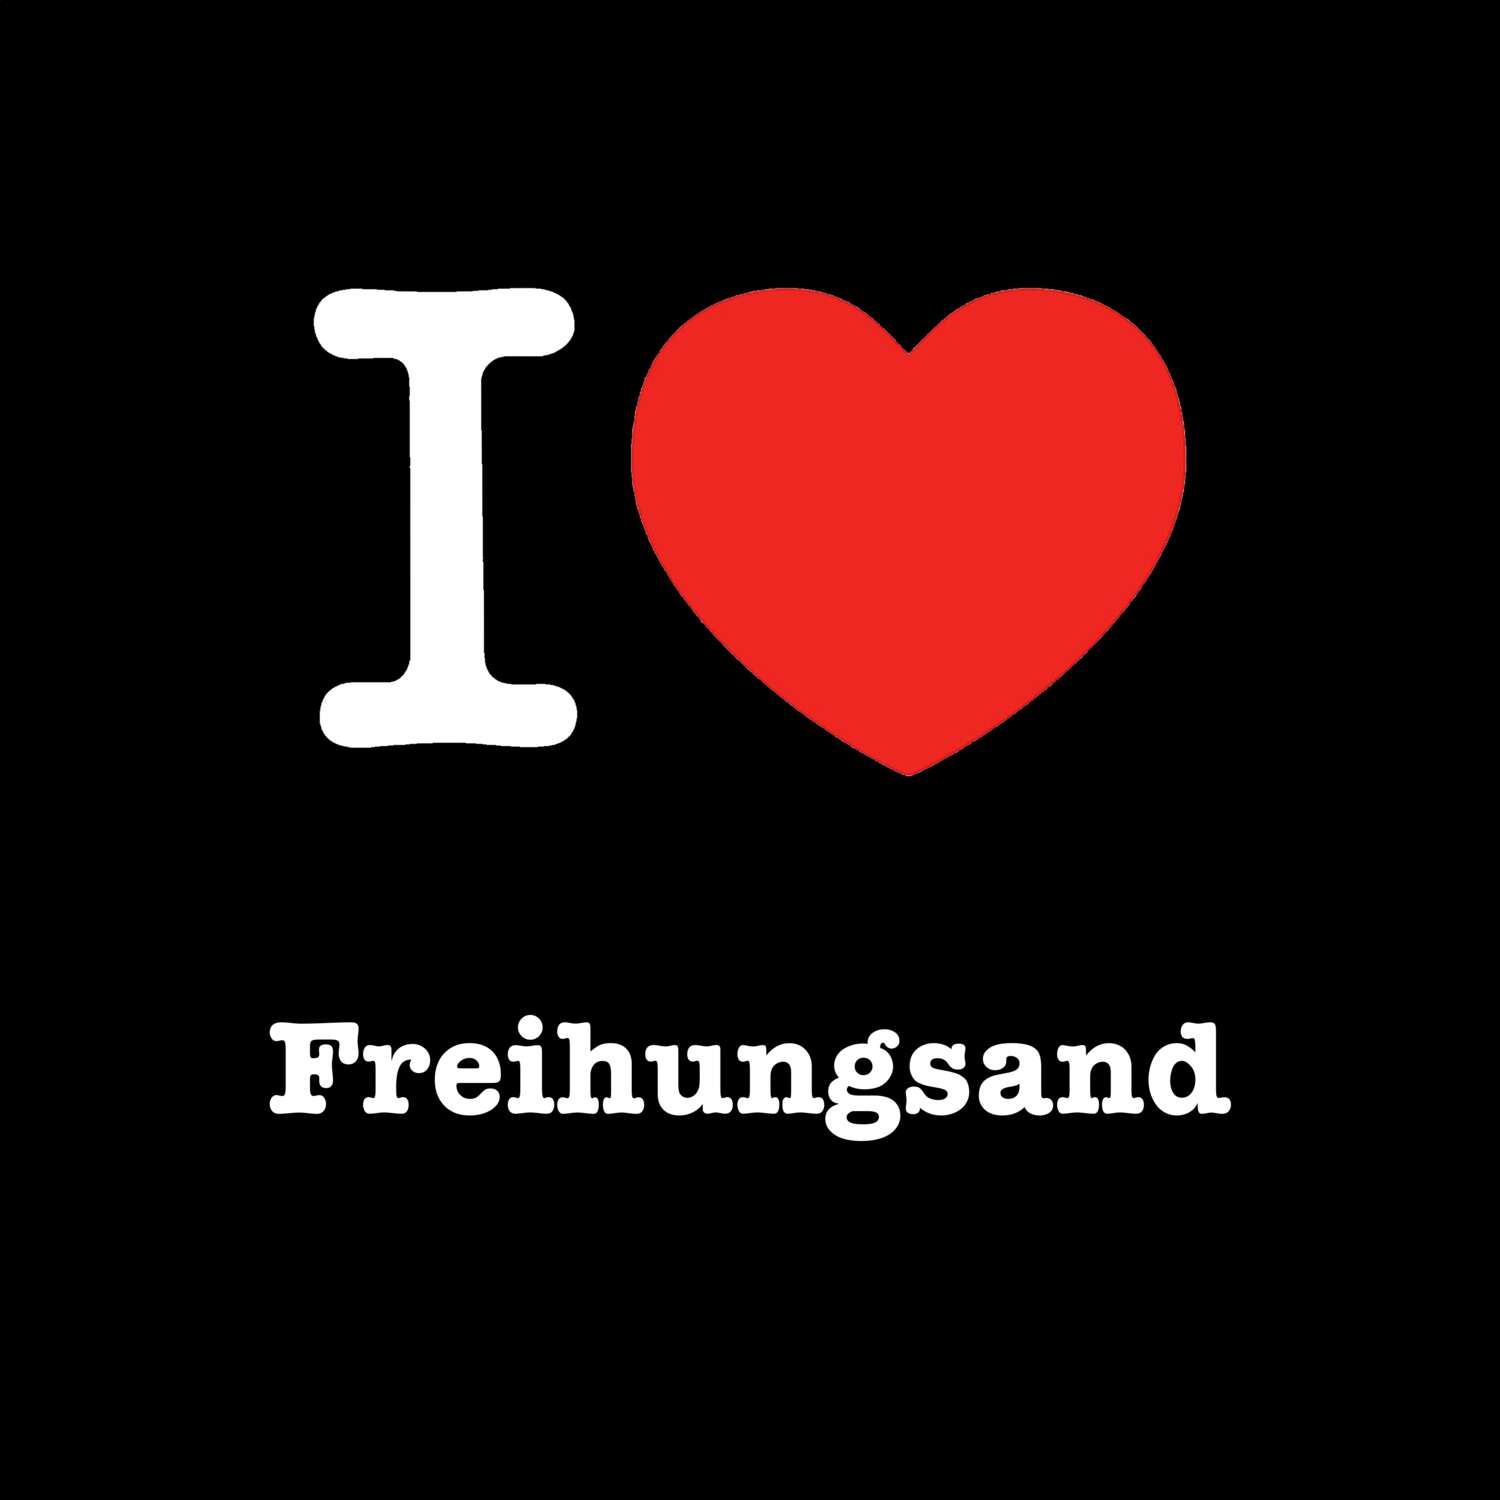 Freihungsand T-Shirt »I love«